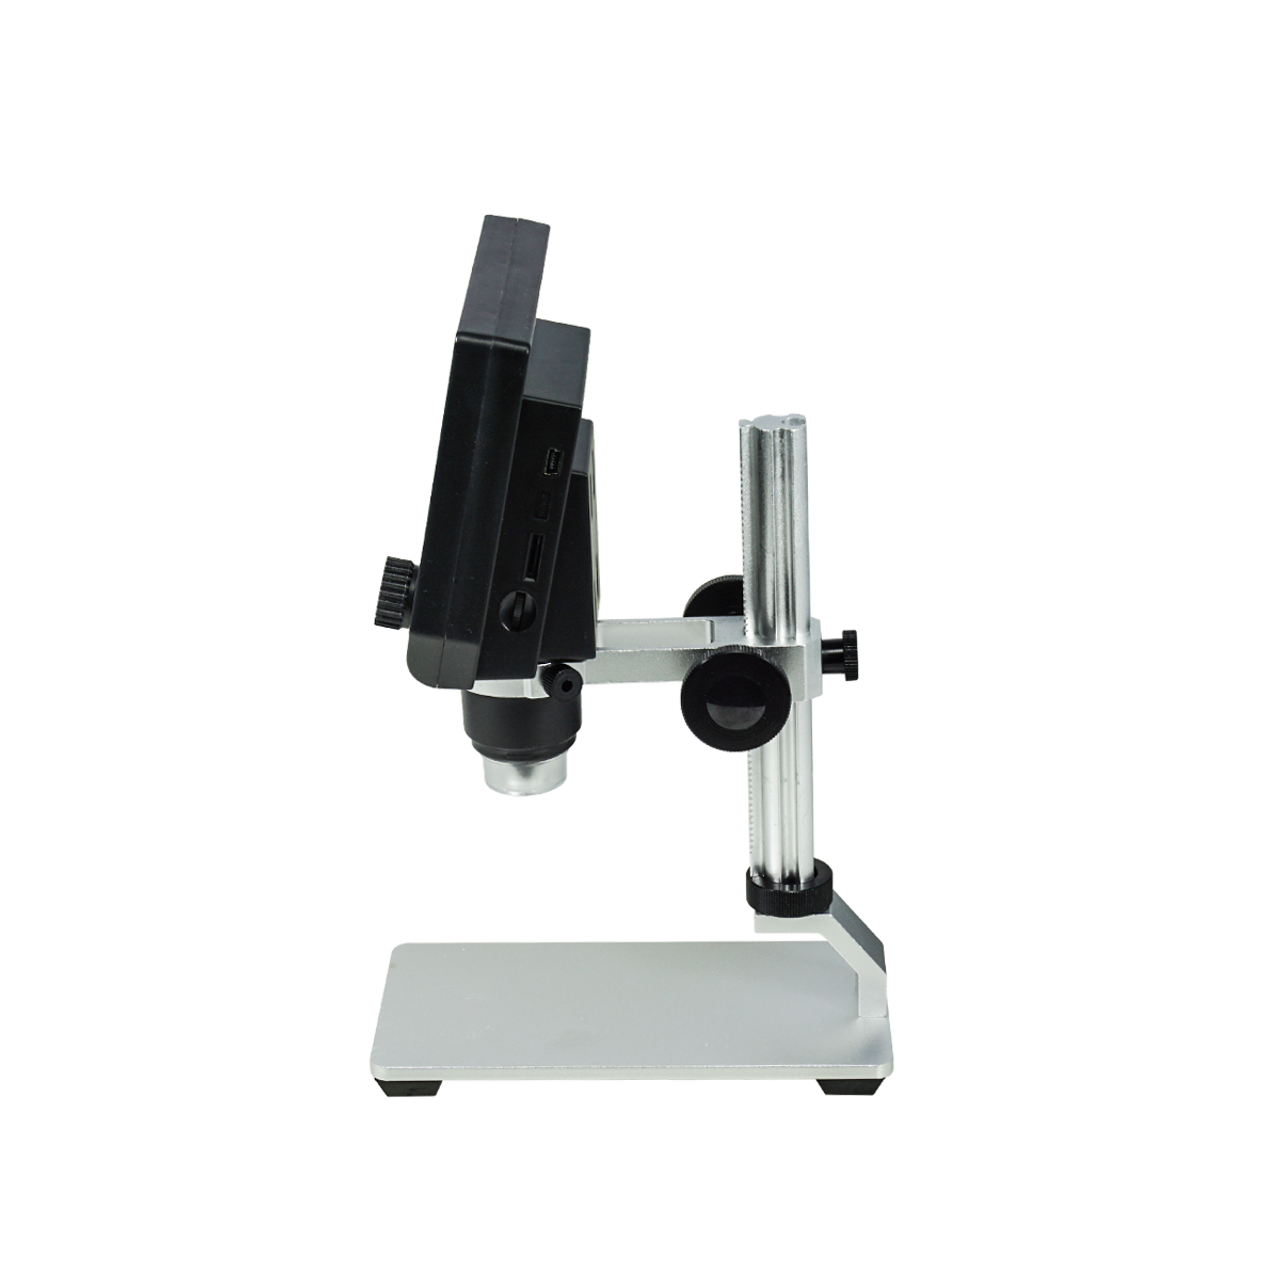 Digital Coin Microscope -1080p Microscope LED Light Focus 5MP Wireless - USB or WiFi Compatible